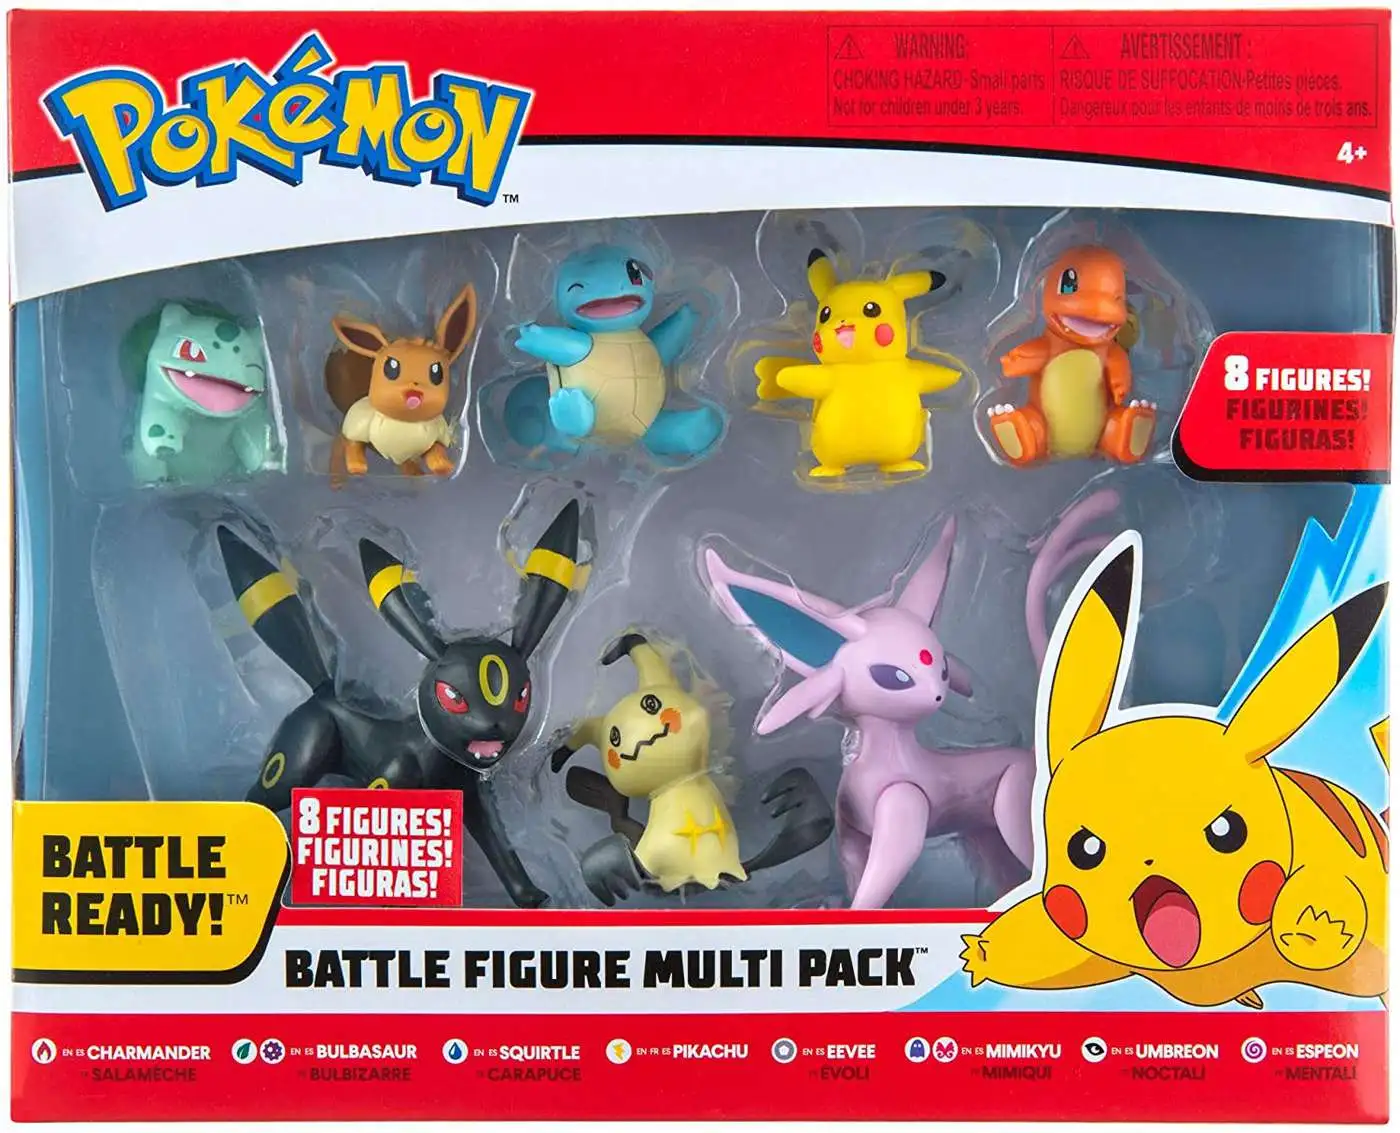  Pokemon Battle Ready! Figure Set, 8 Pieces - Playset with 2 & 3  inch Figures Pikachu, Scorbunny, Grookey, Sobble, Jigglypuff, Cubone,  Vaporeon & Magikarp - Gift for Kids, Boys, Girls - Ages 4+ : Toys & Games